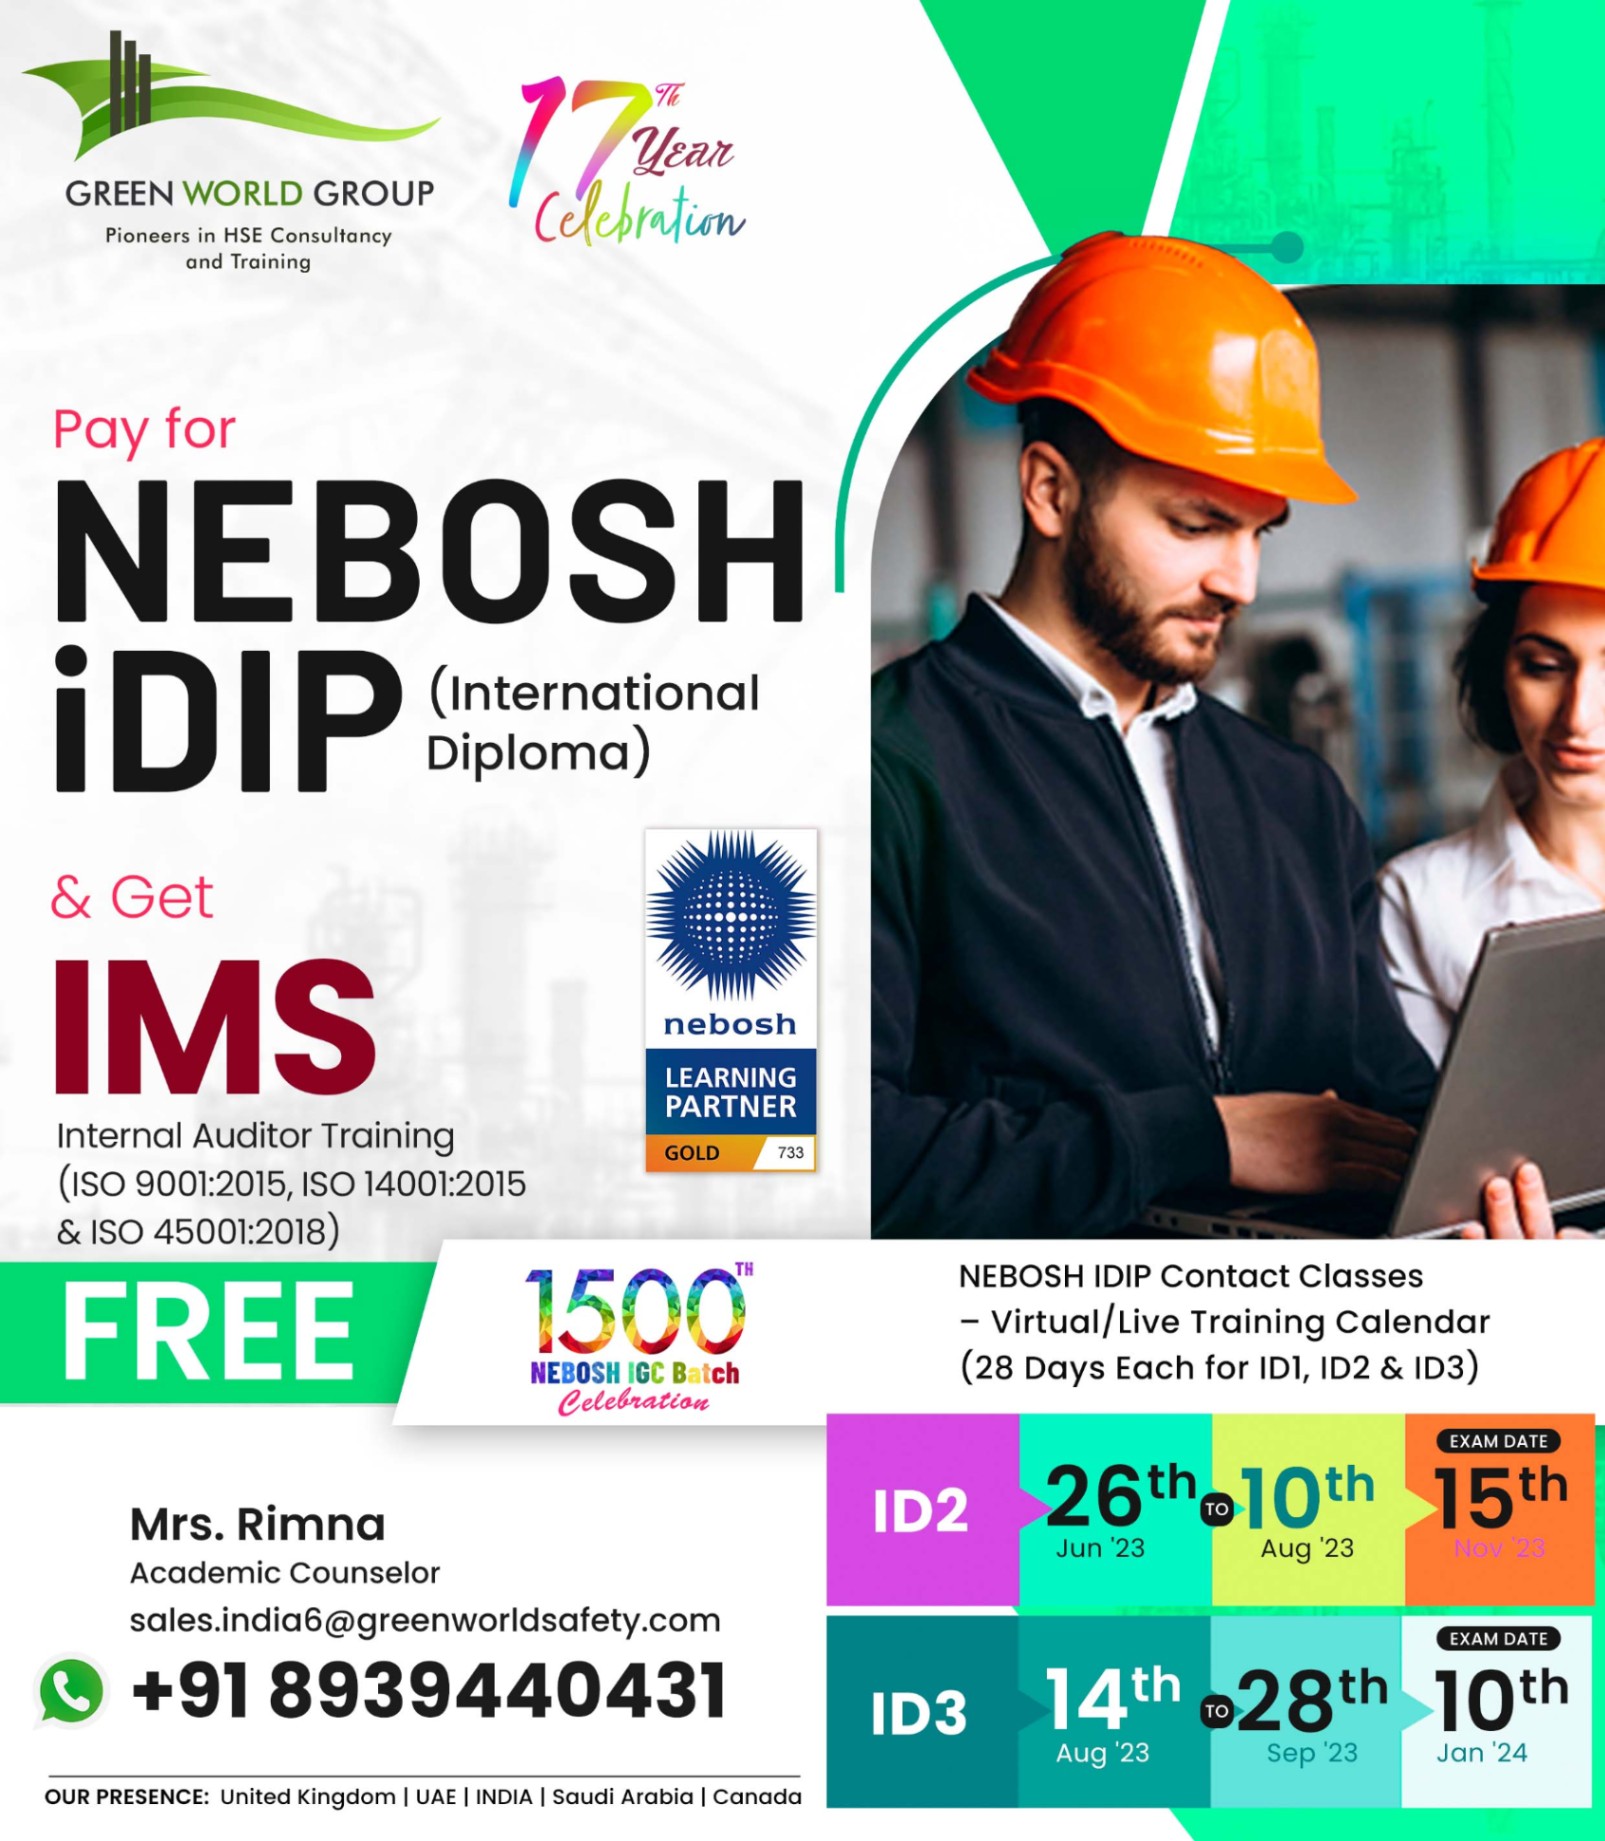 Enrol in NEBOSH IDip for Career Advancement!